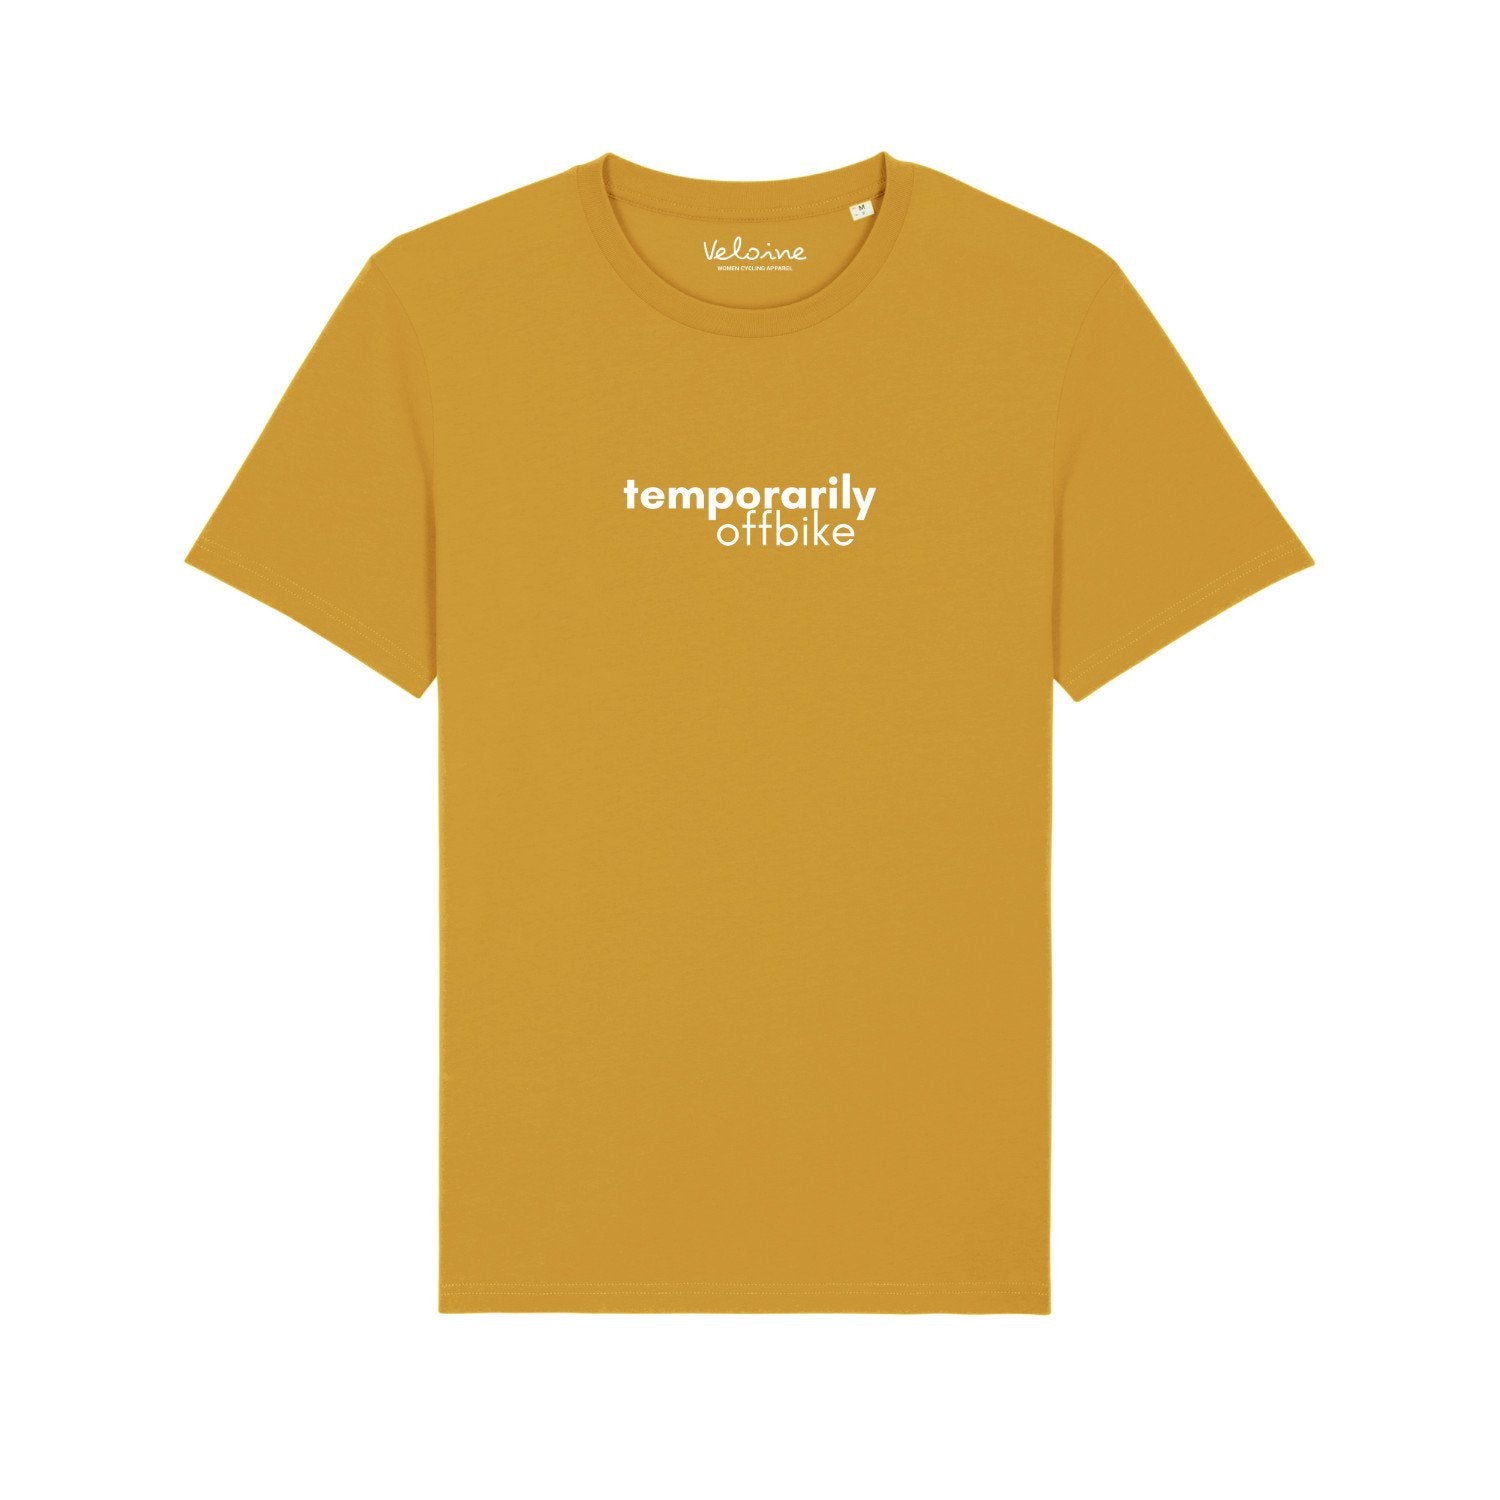 Shirt - temporarily offbike Mustard